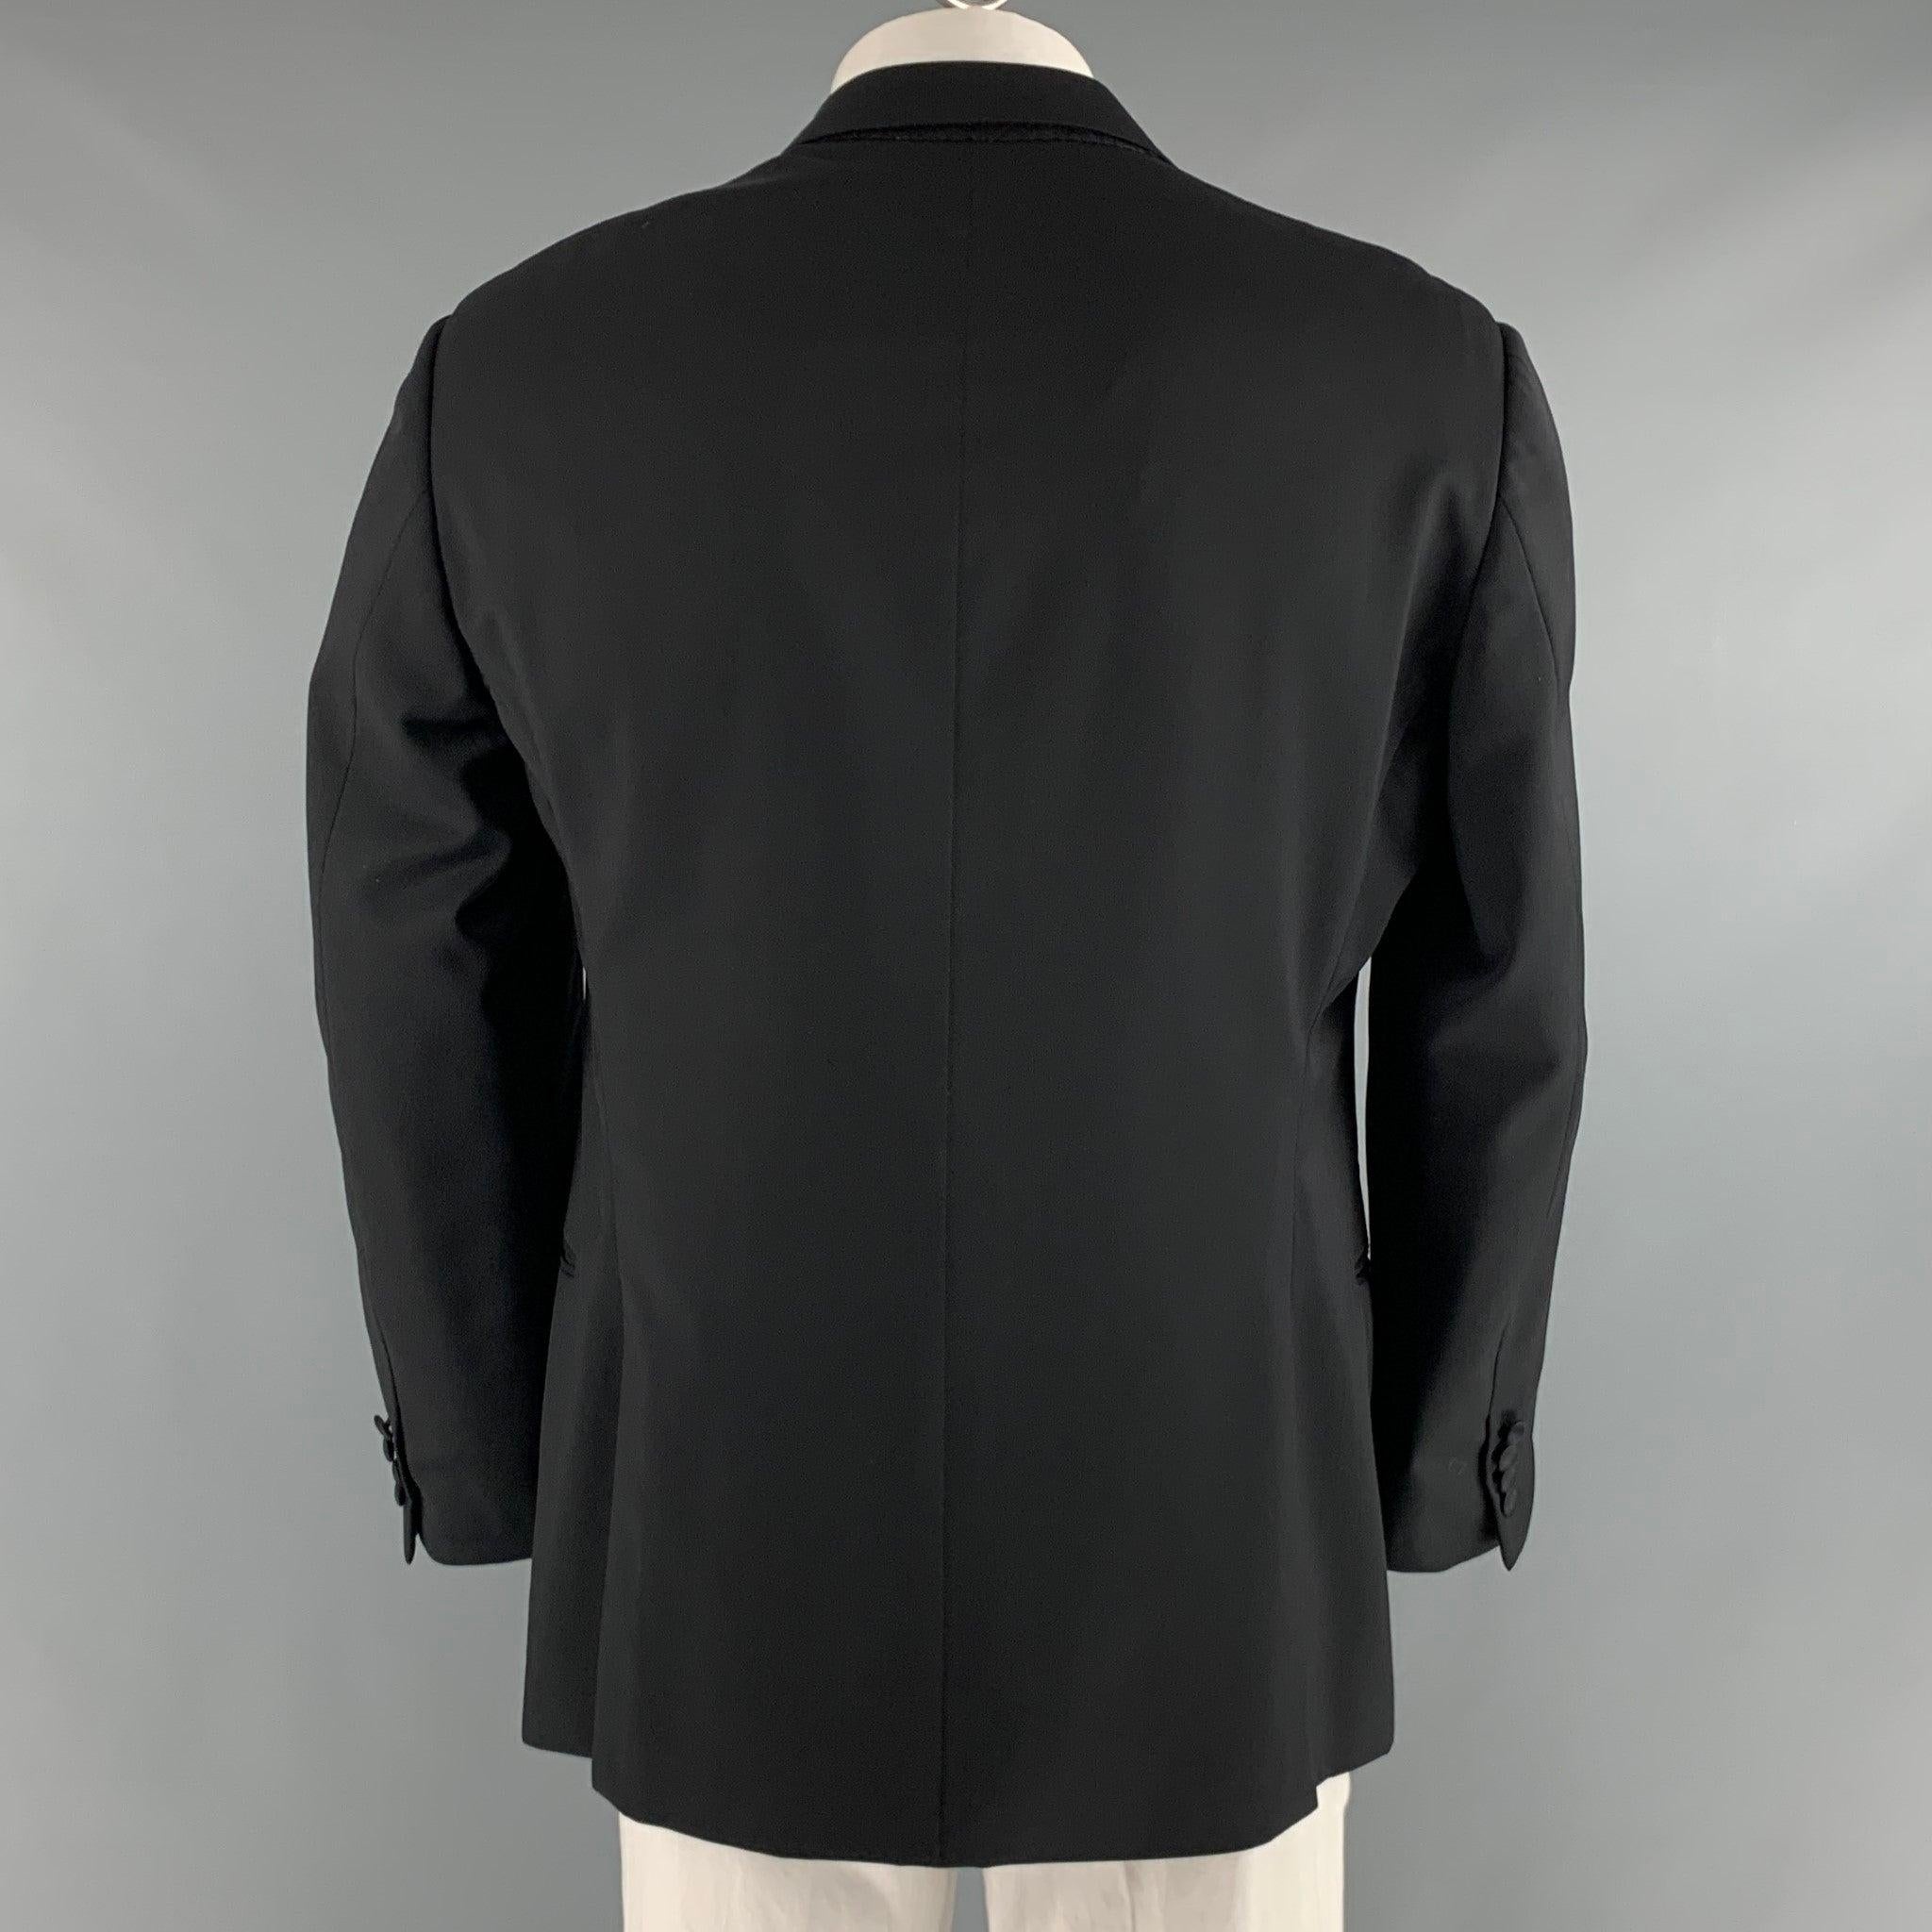 ARMANI COLLEZIONI Size 44 Black Solid Wool Tuxedo Sport Coat In Excellent Condition For Sale In San Francisco, CA